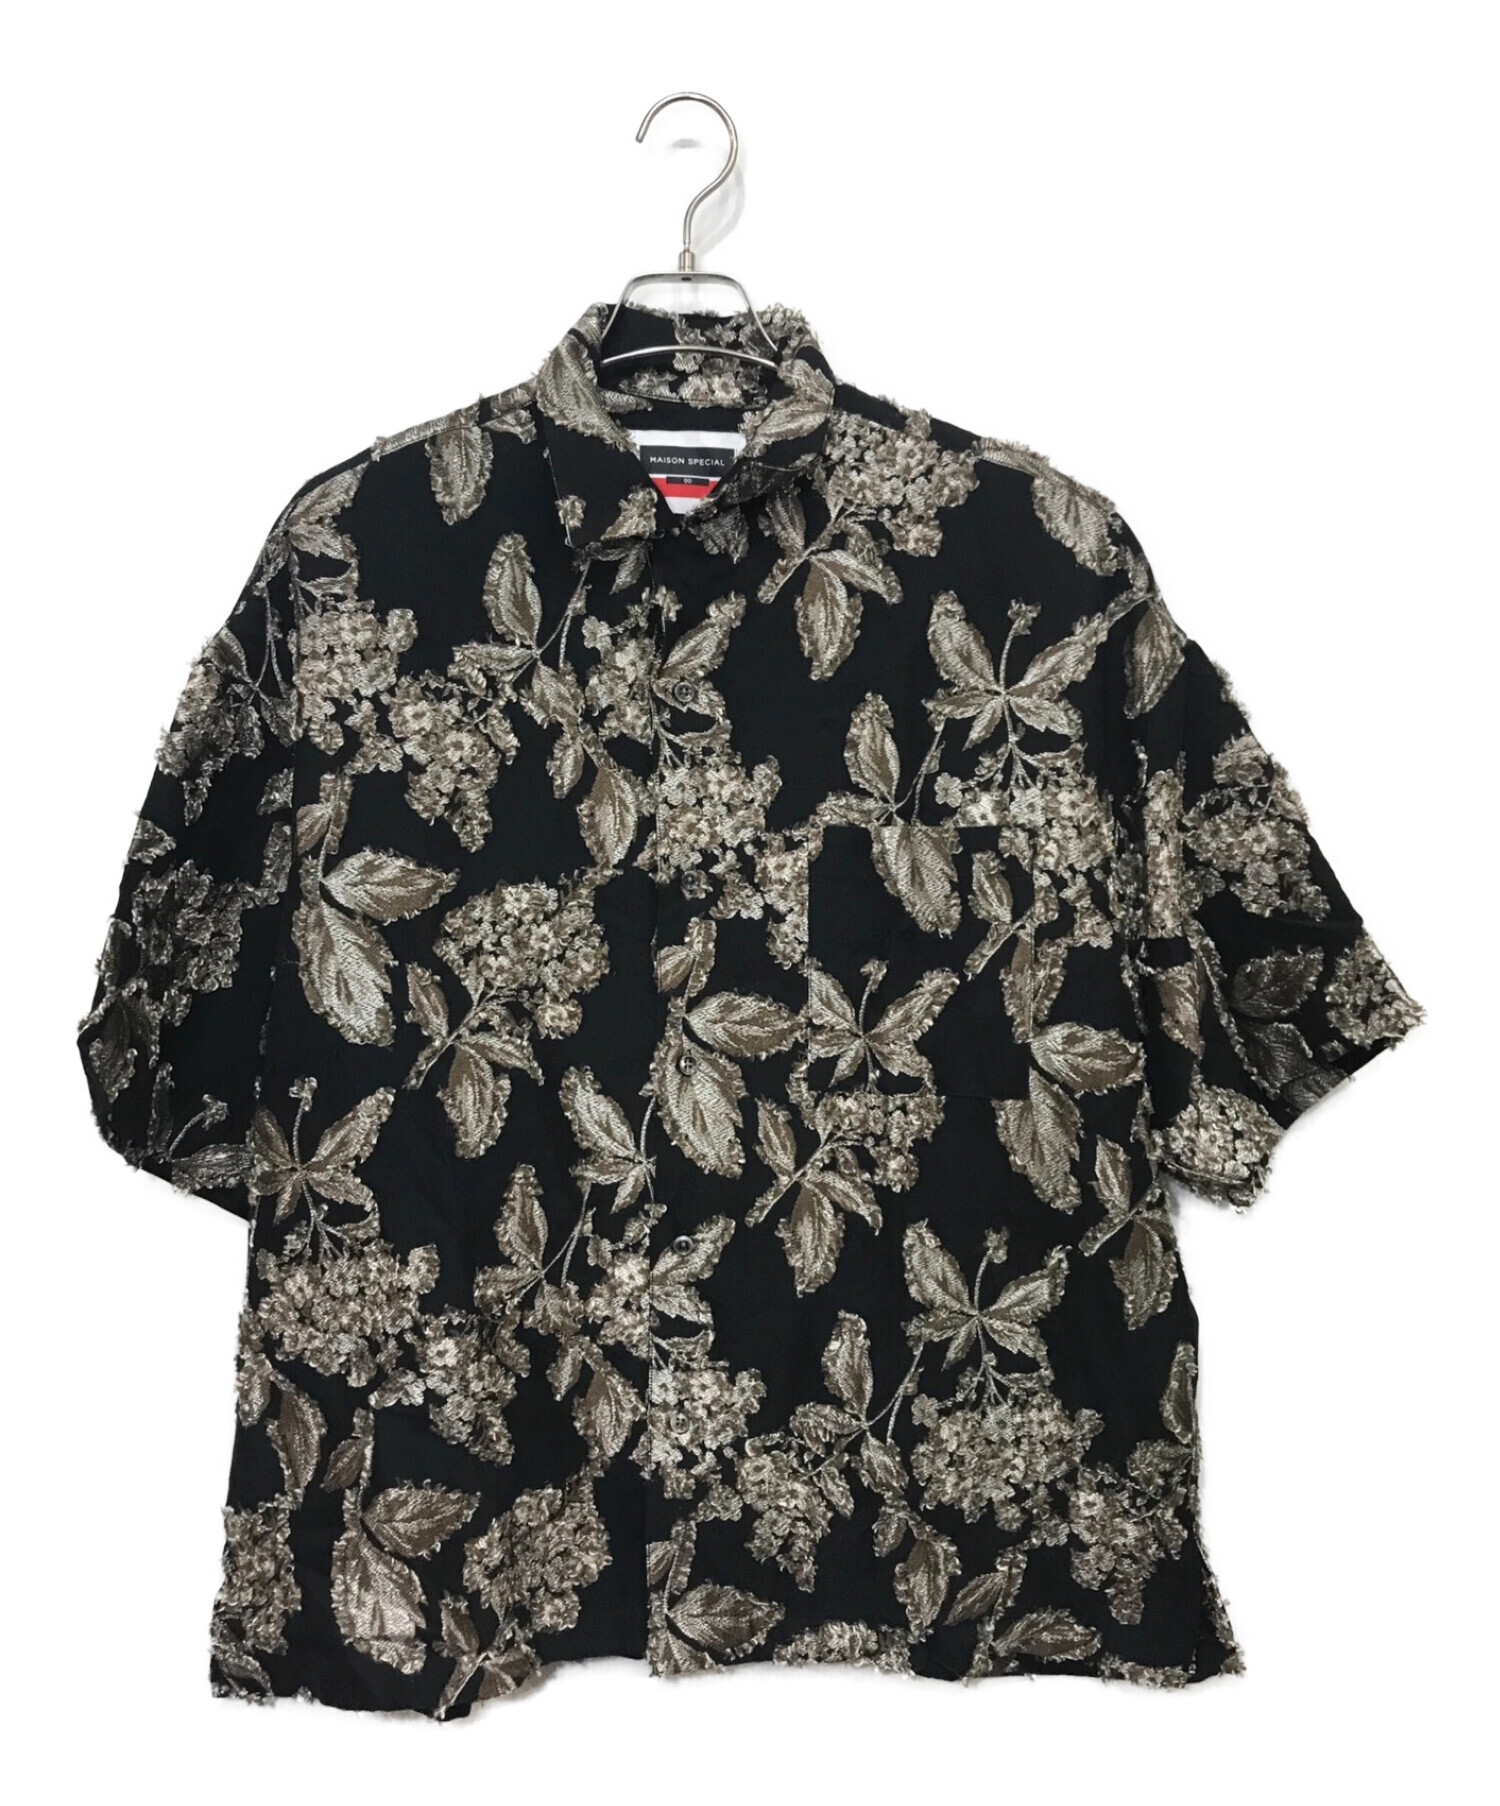 MAISON SPECIAL (メゾンスペシャル) カットオフリーフ ジャガード プライムオーバーオープンカラーシャツ ブラック×ブラウン サイズ:00